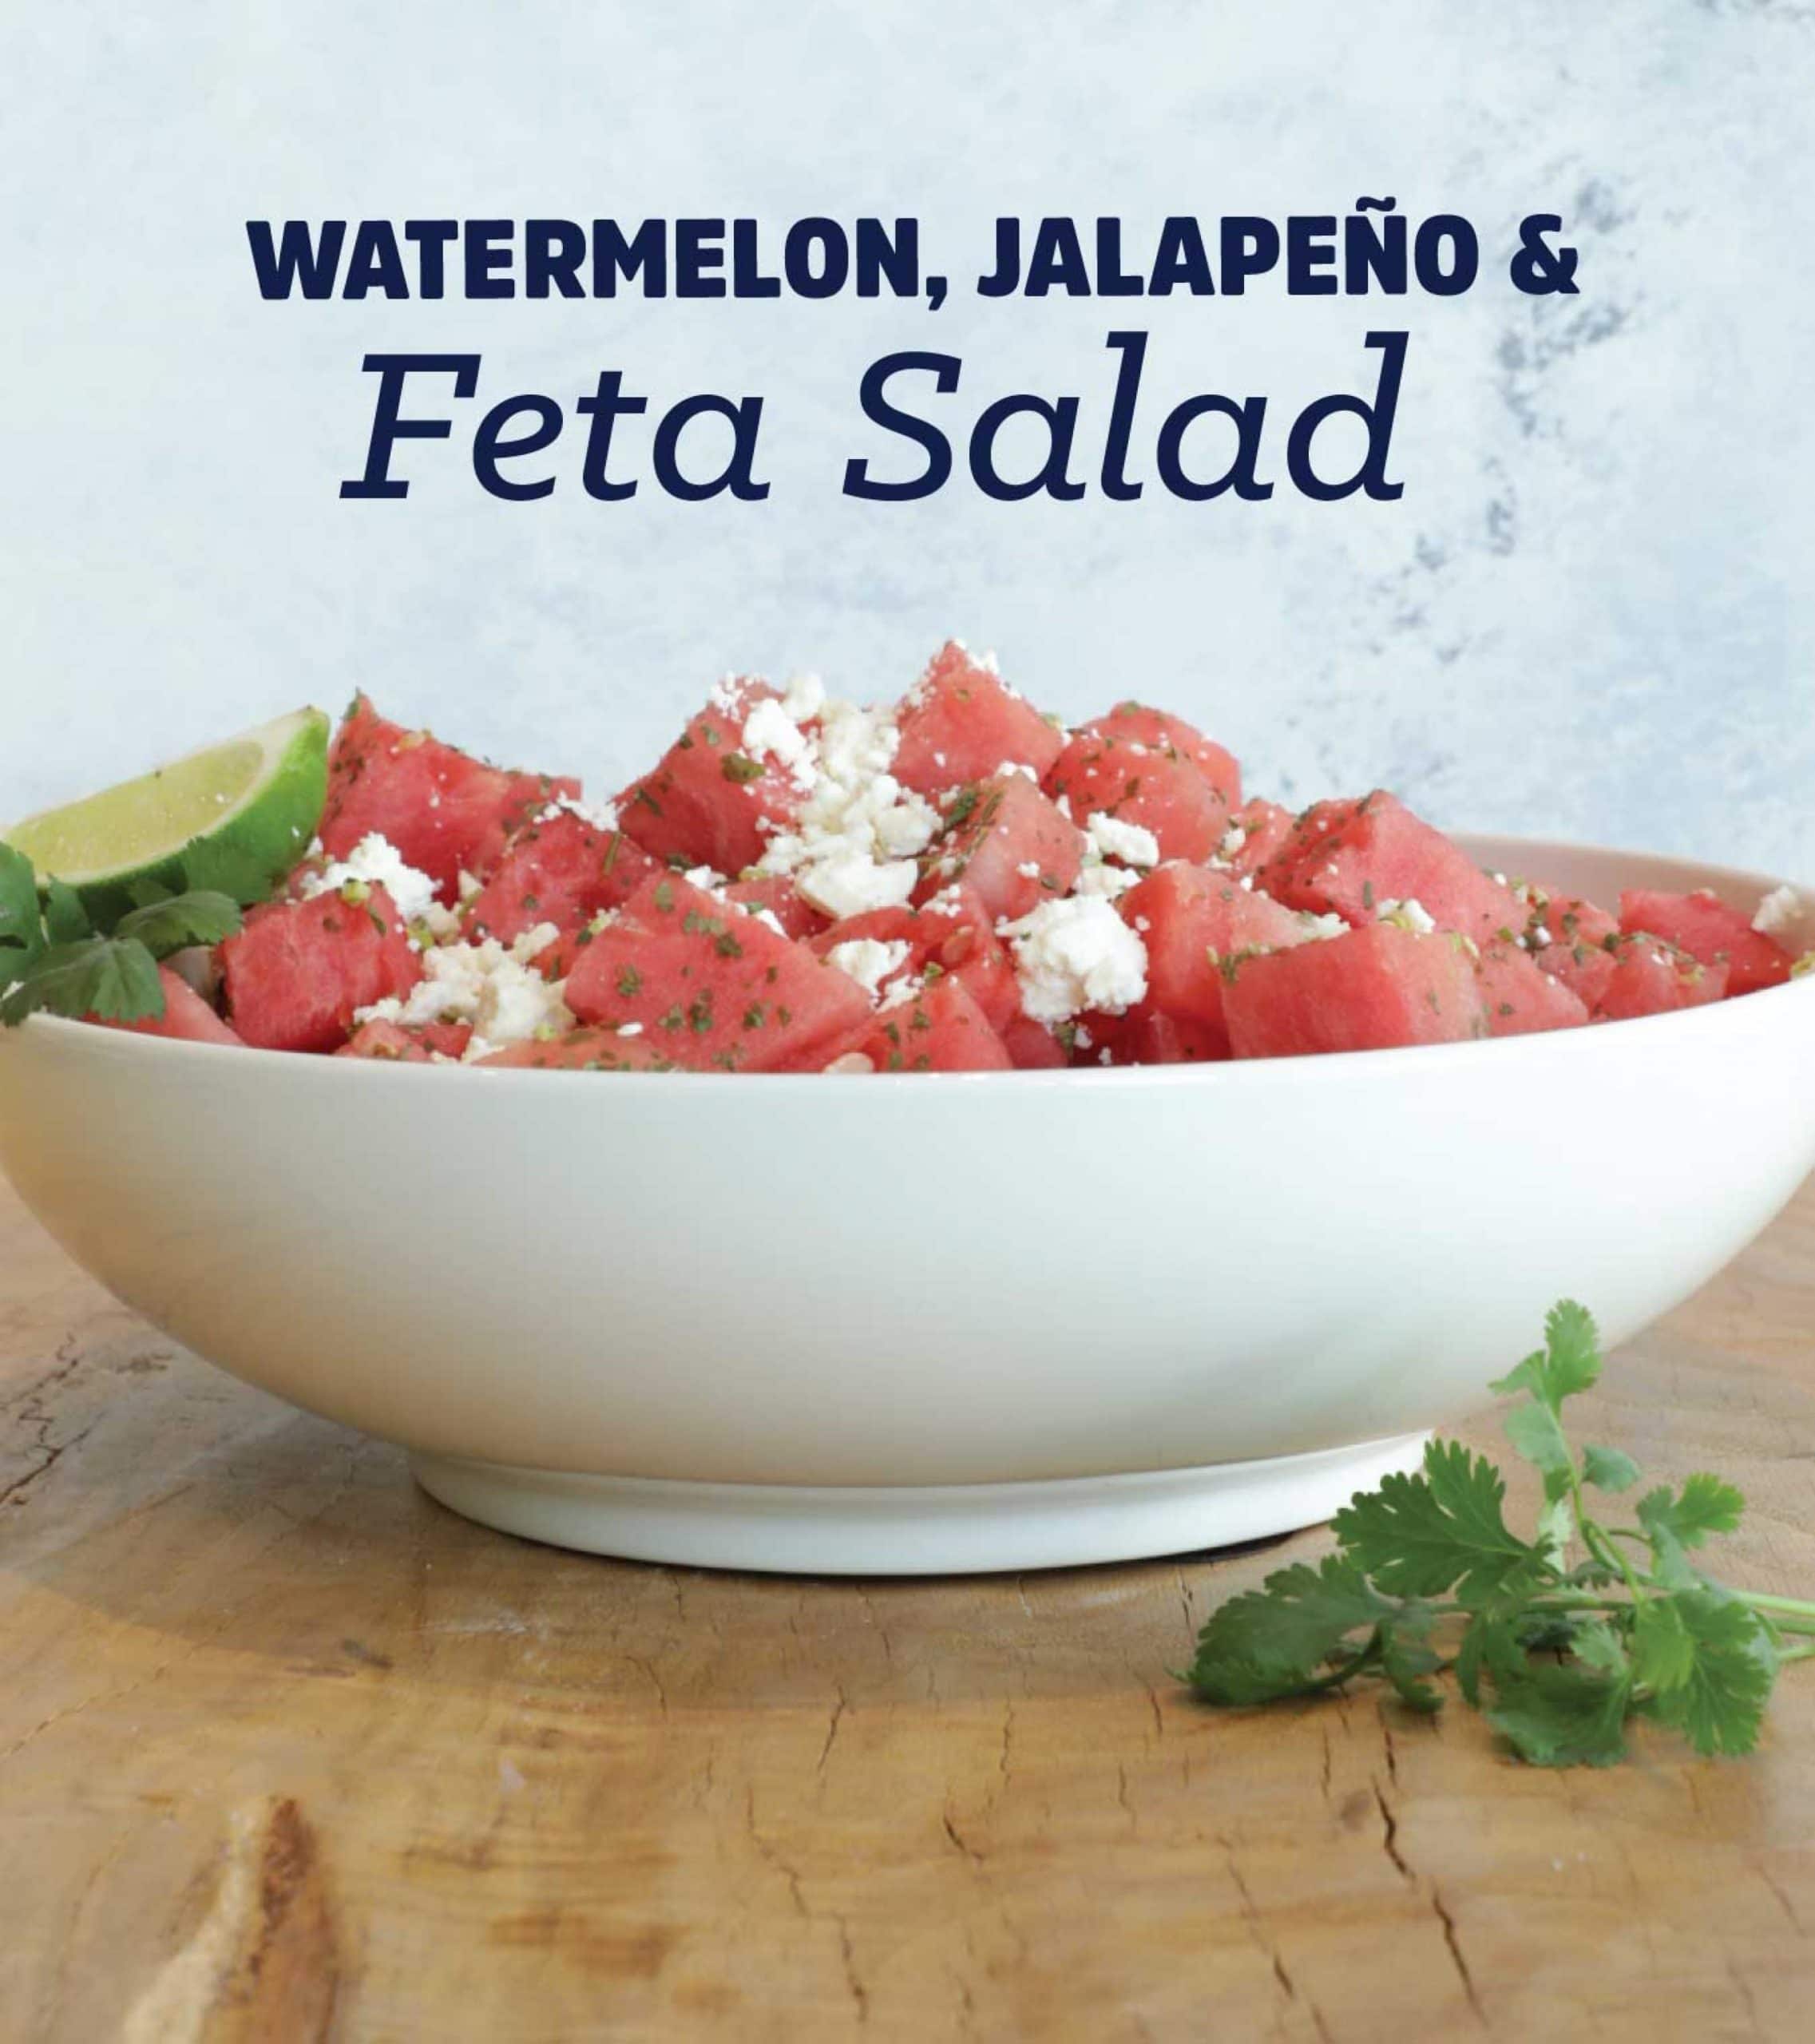 WATERMELON, JALAPEÑO & Feta Salad